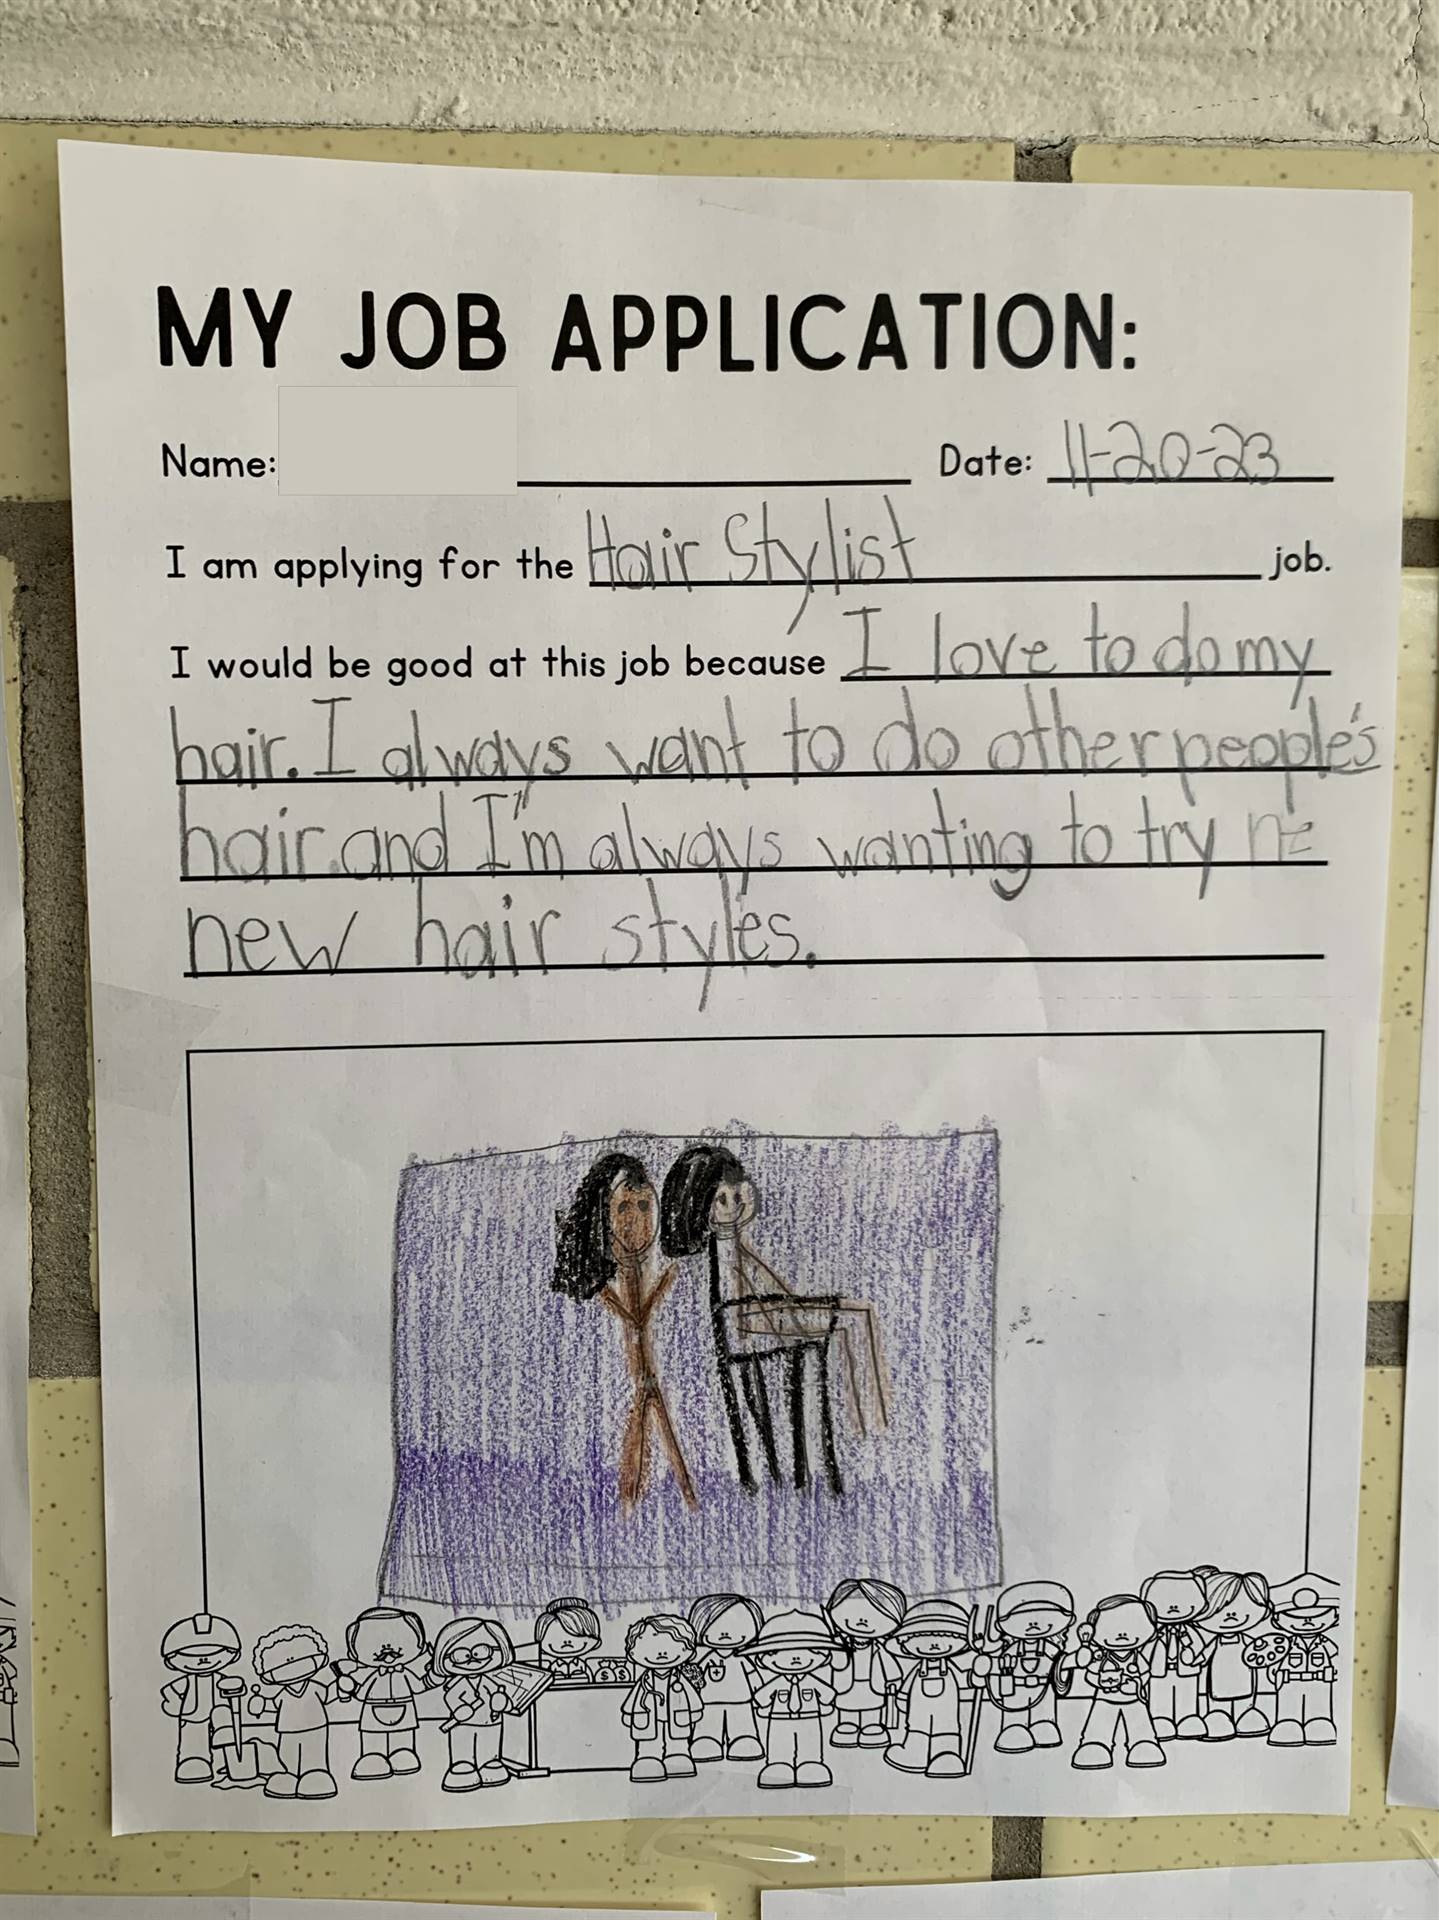 A 3rd grade job application for a hair stylist.